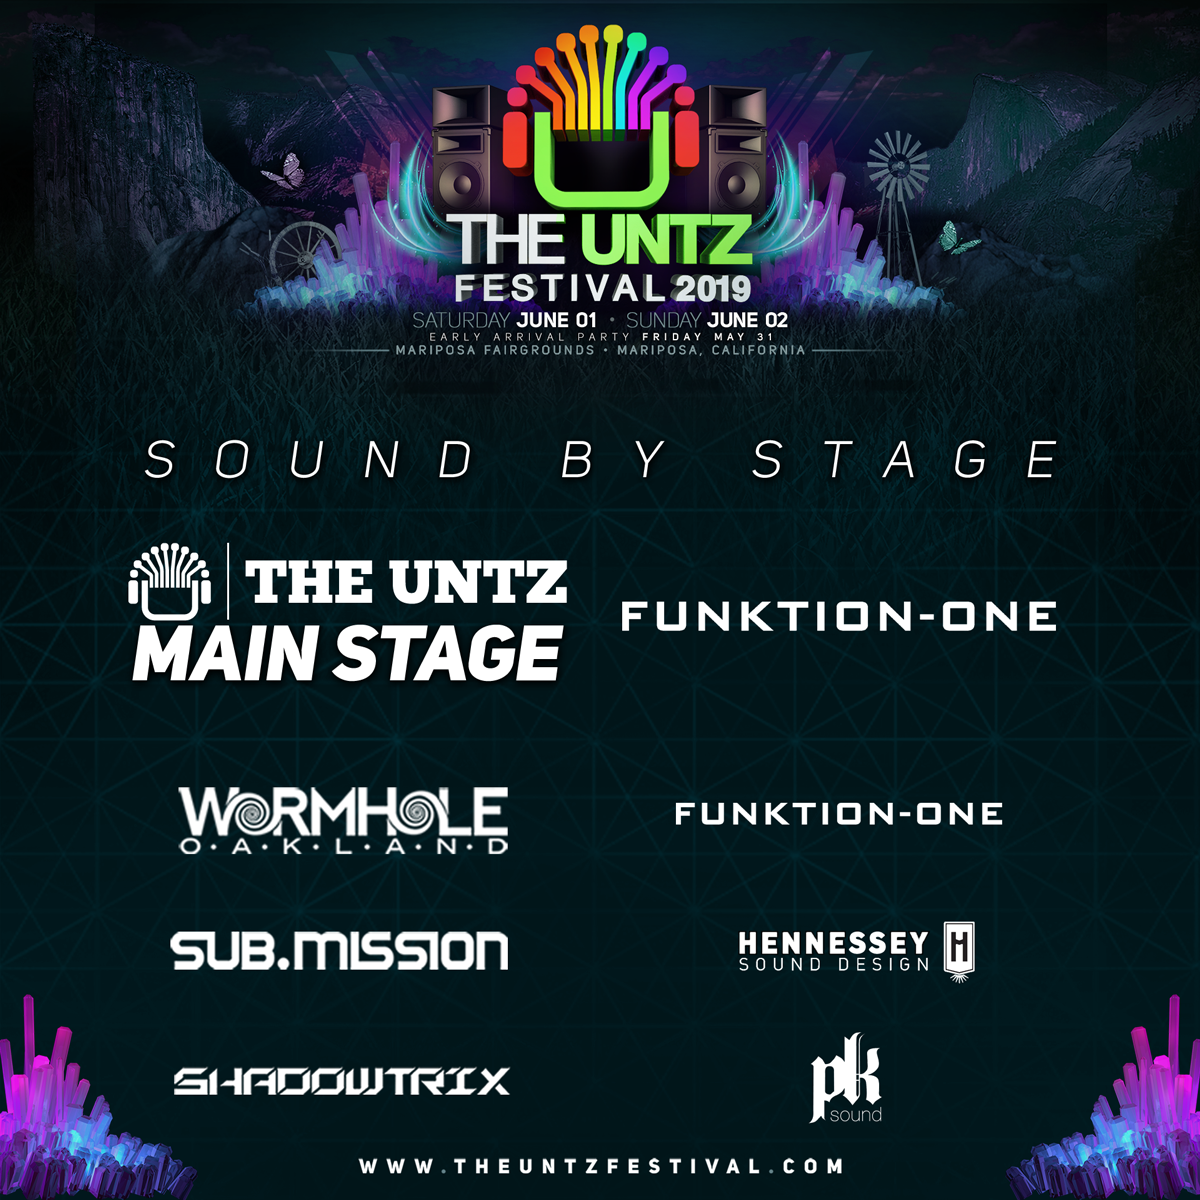 The Untz Festival 2019 sub.mission